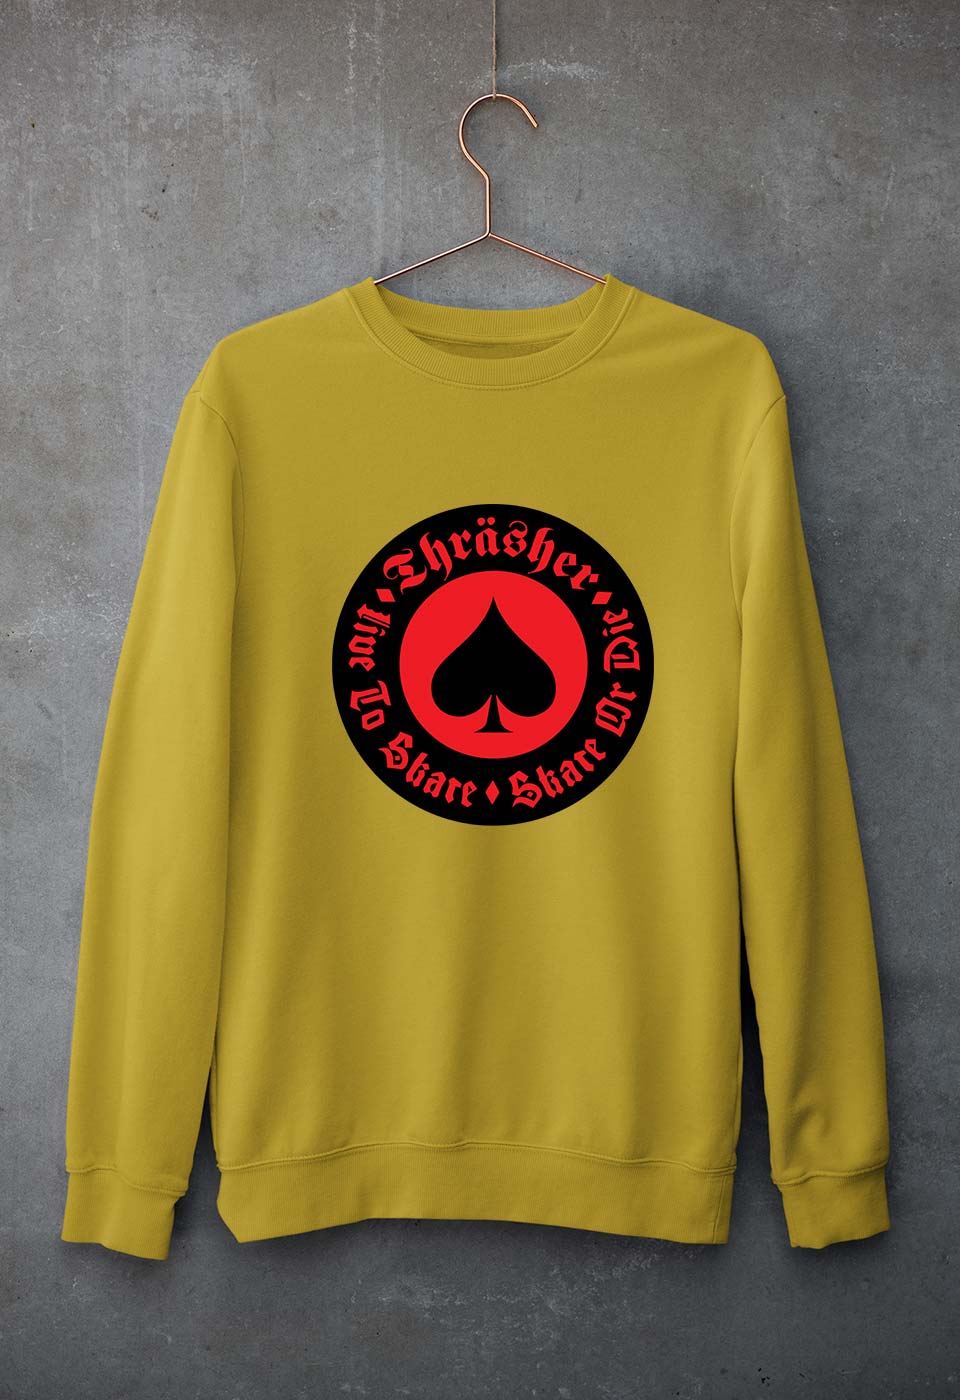 Thrasher Unisex Sweatshirt for Men/Women-S(40 Inches)-Mustard Yellow-Ektarfa.online